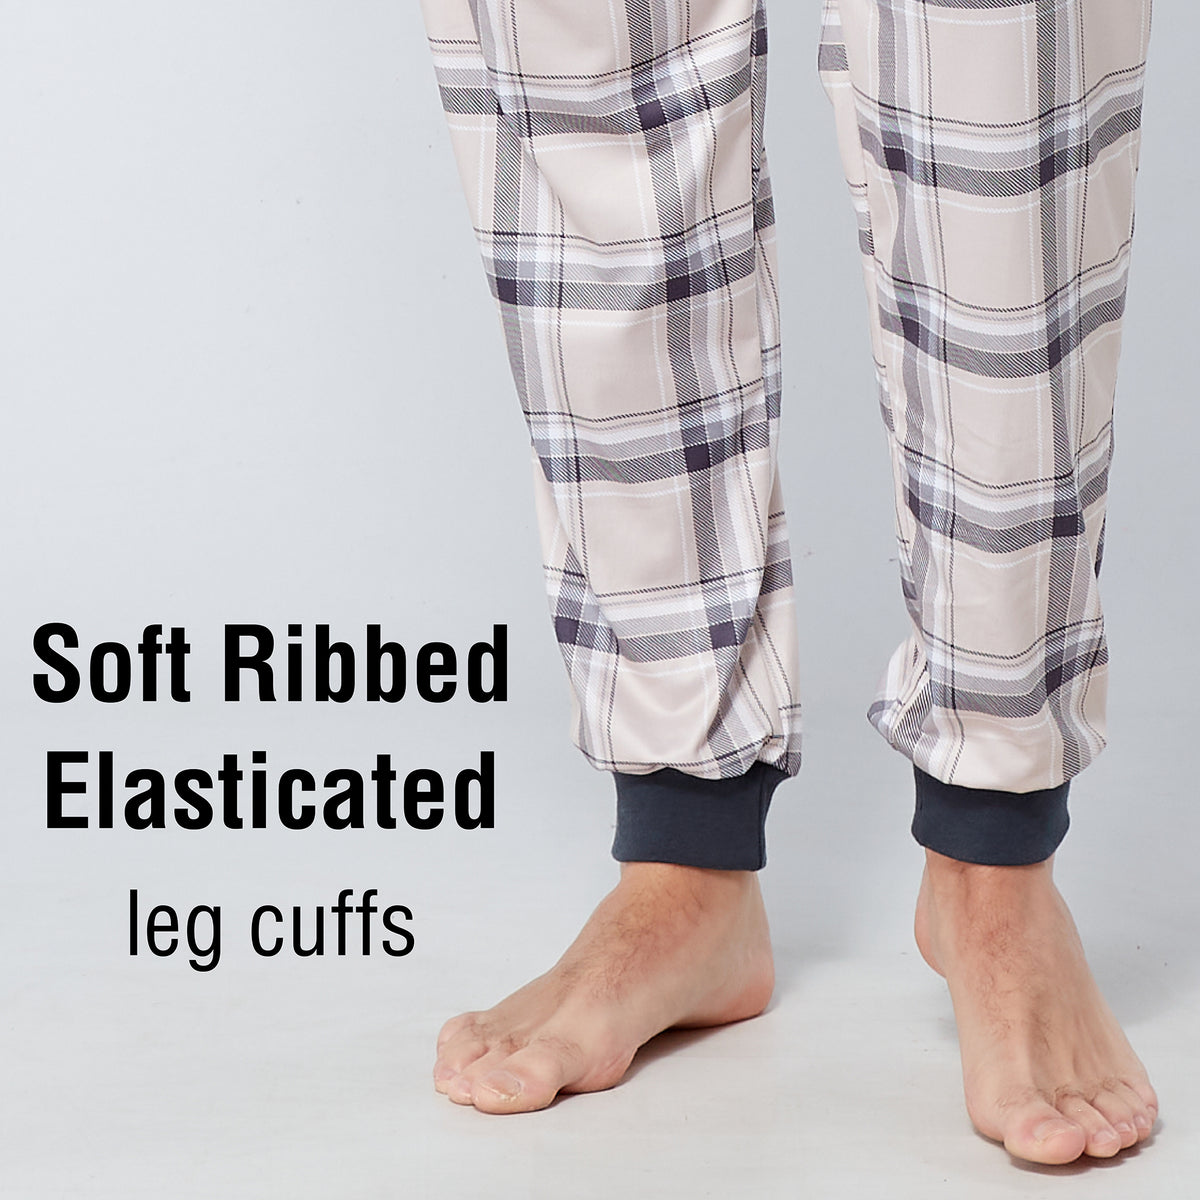 Cream Cuffed Soft Touch Fleece Lounge Pants